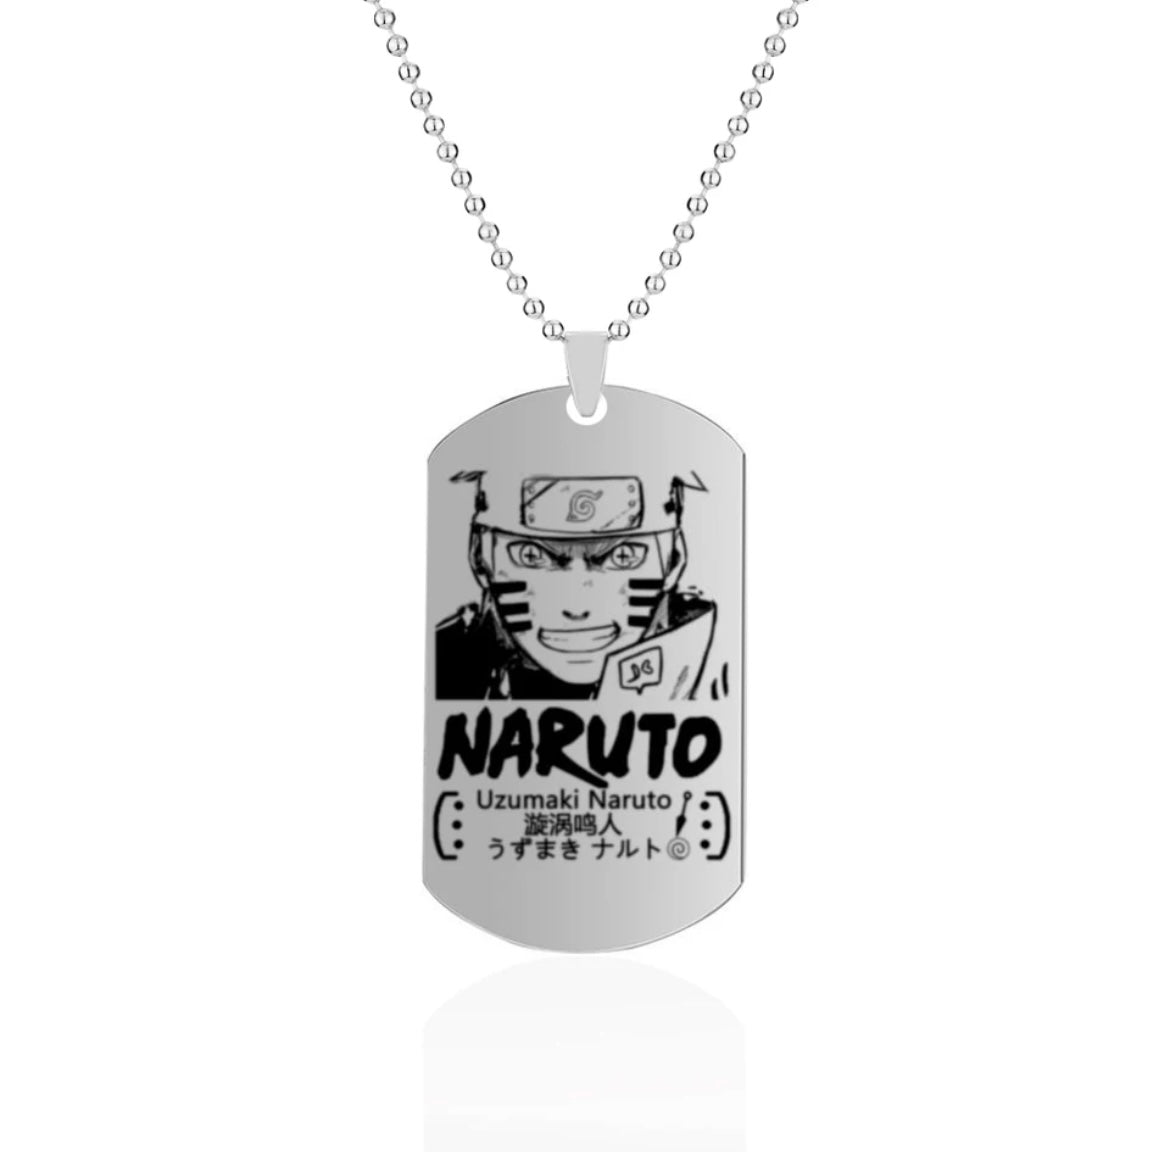 Naruto Halsketten